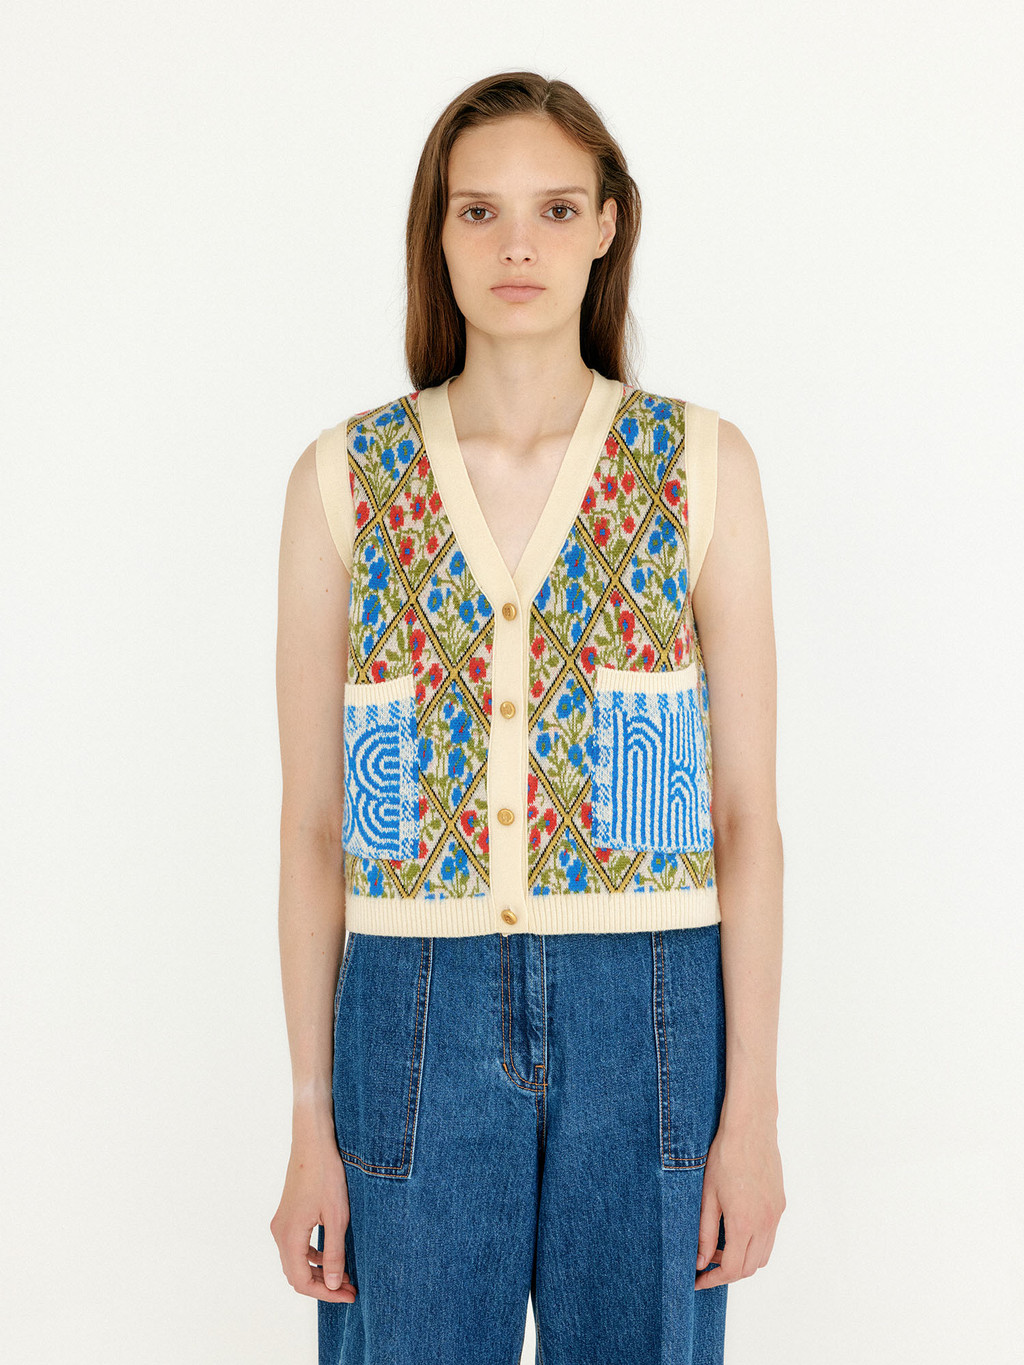 VITA Flower Pattern Knit Vest - Ivory/Blue/Red Multi : EENK SHOP